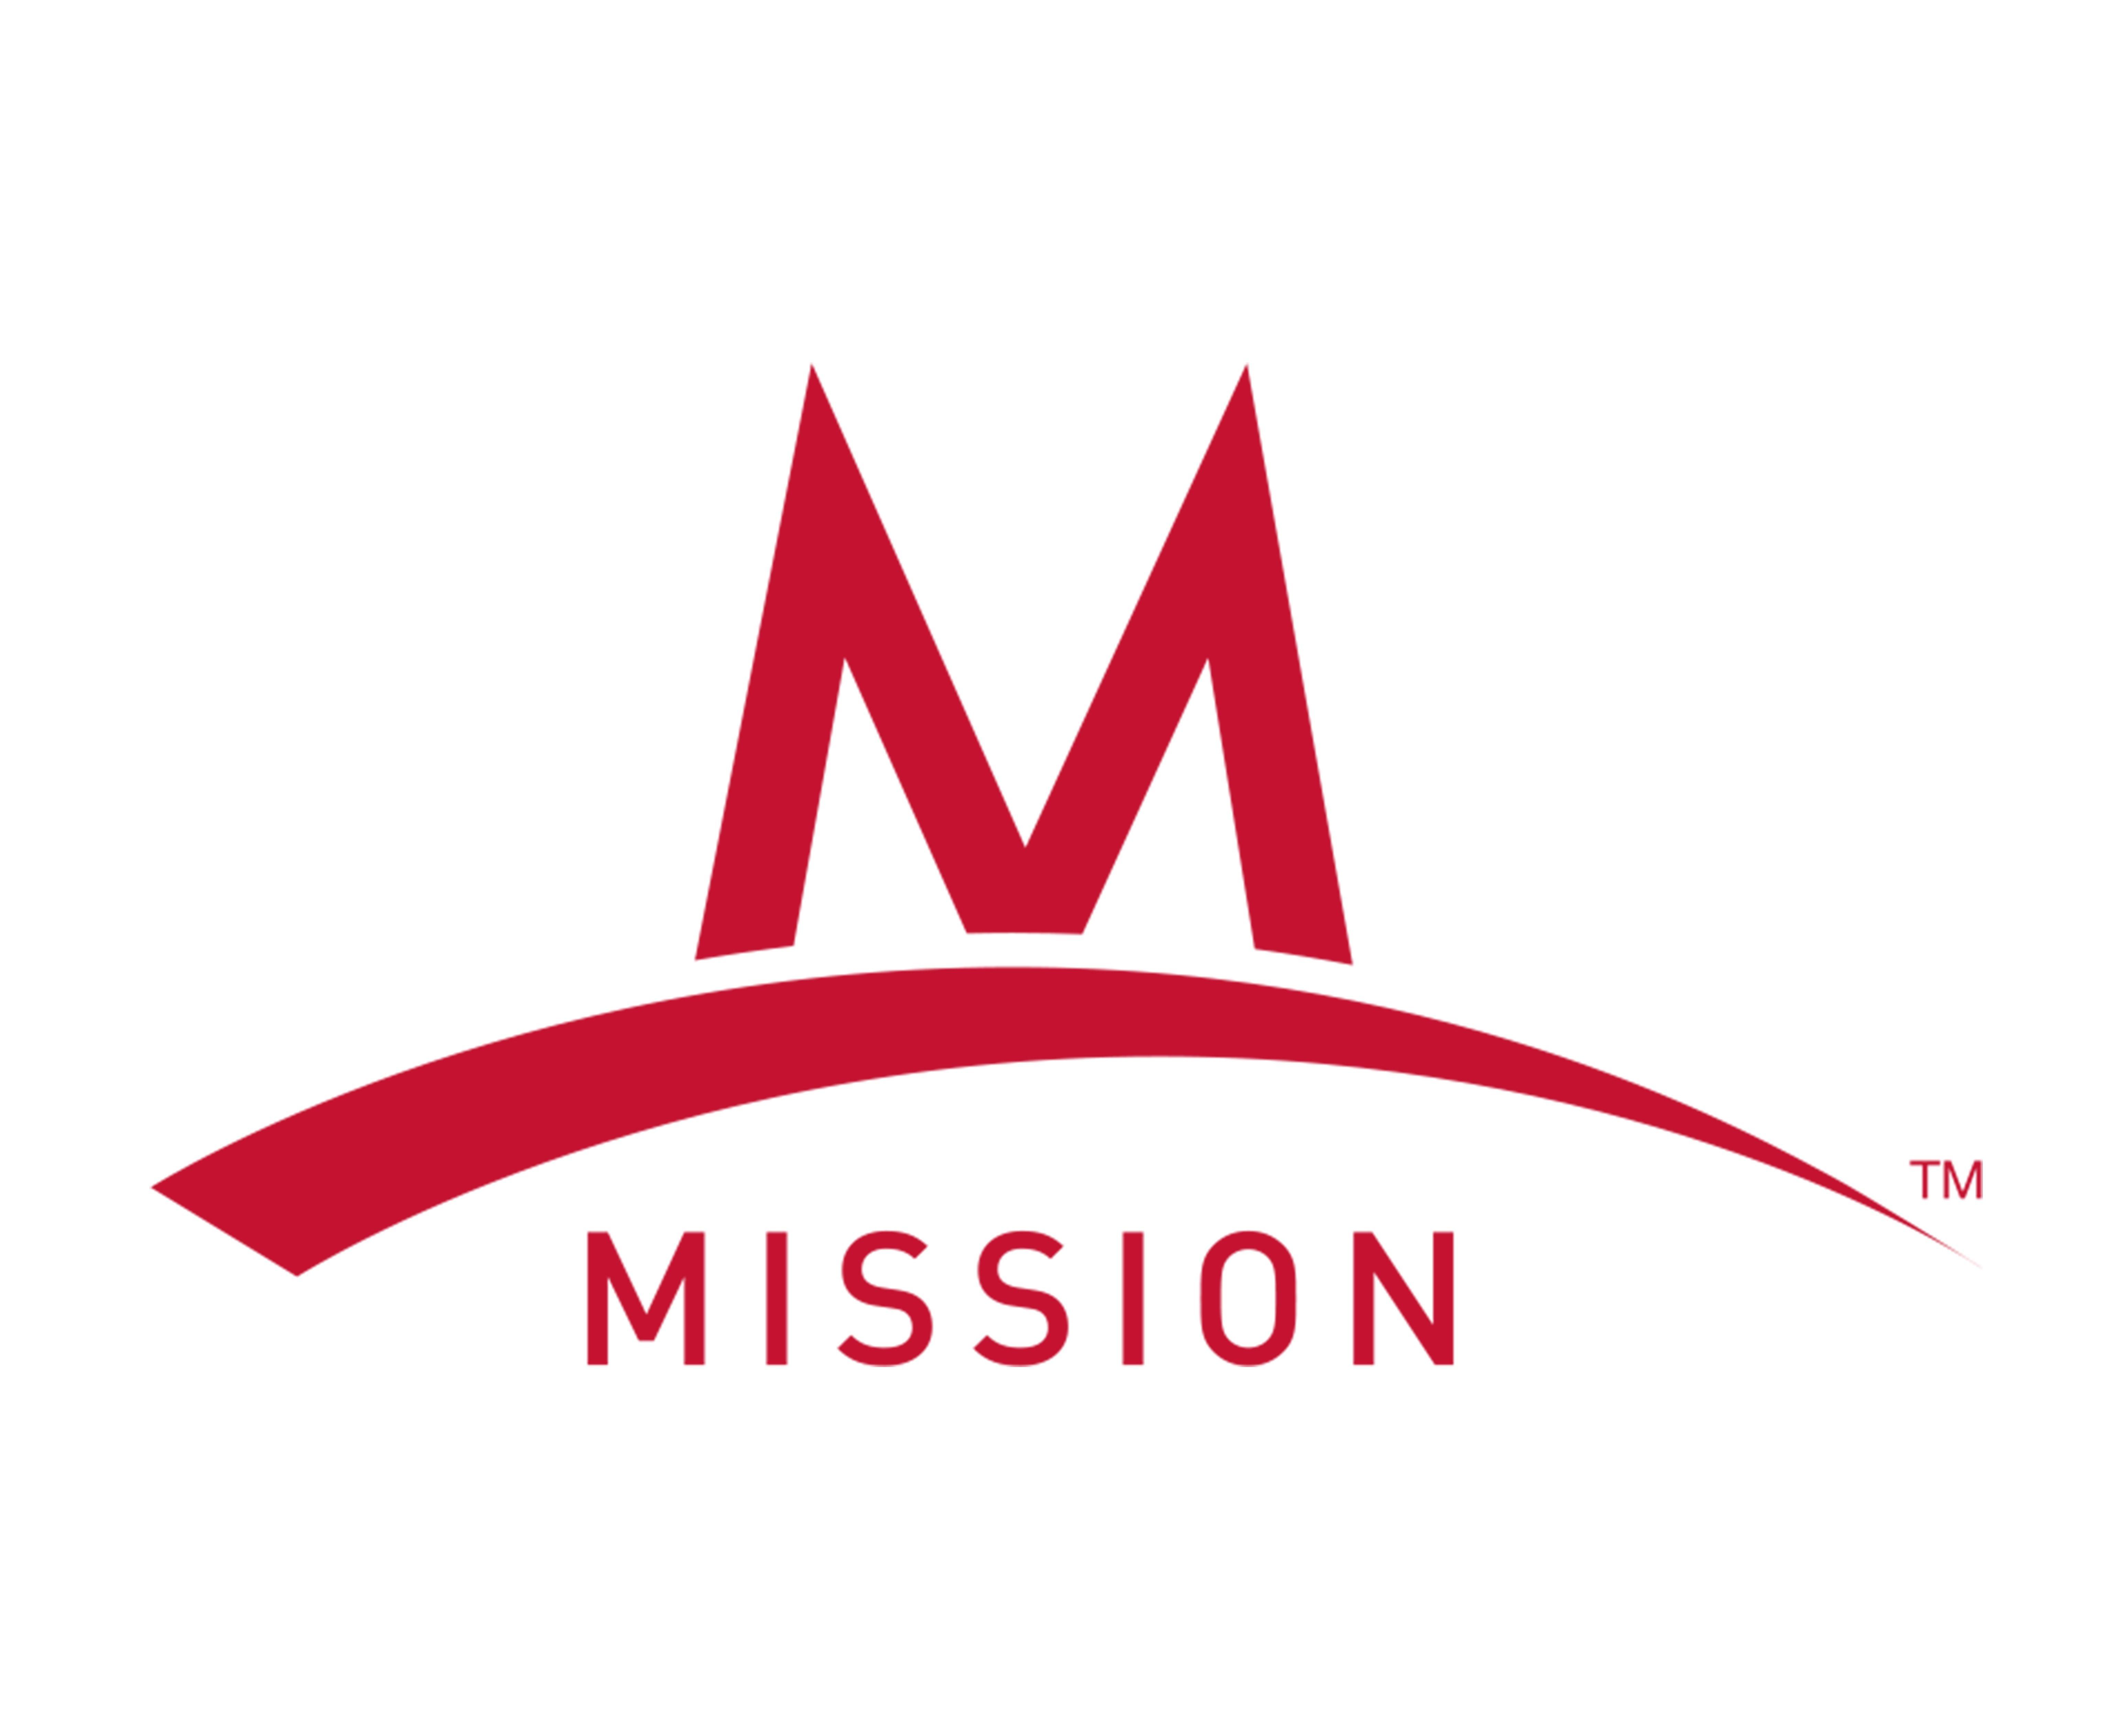 Mission Logo - Mission Logos